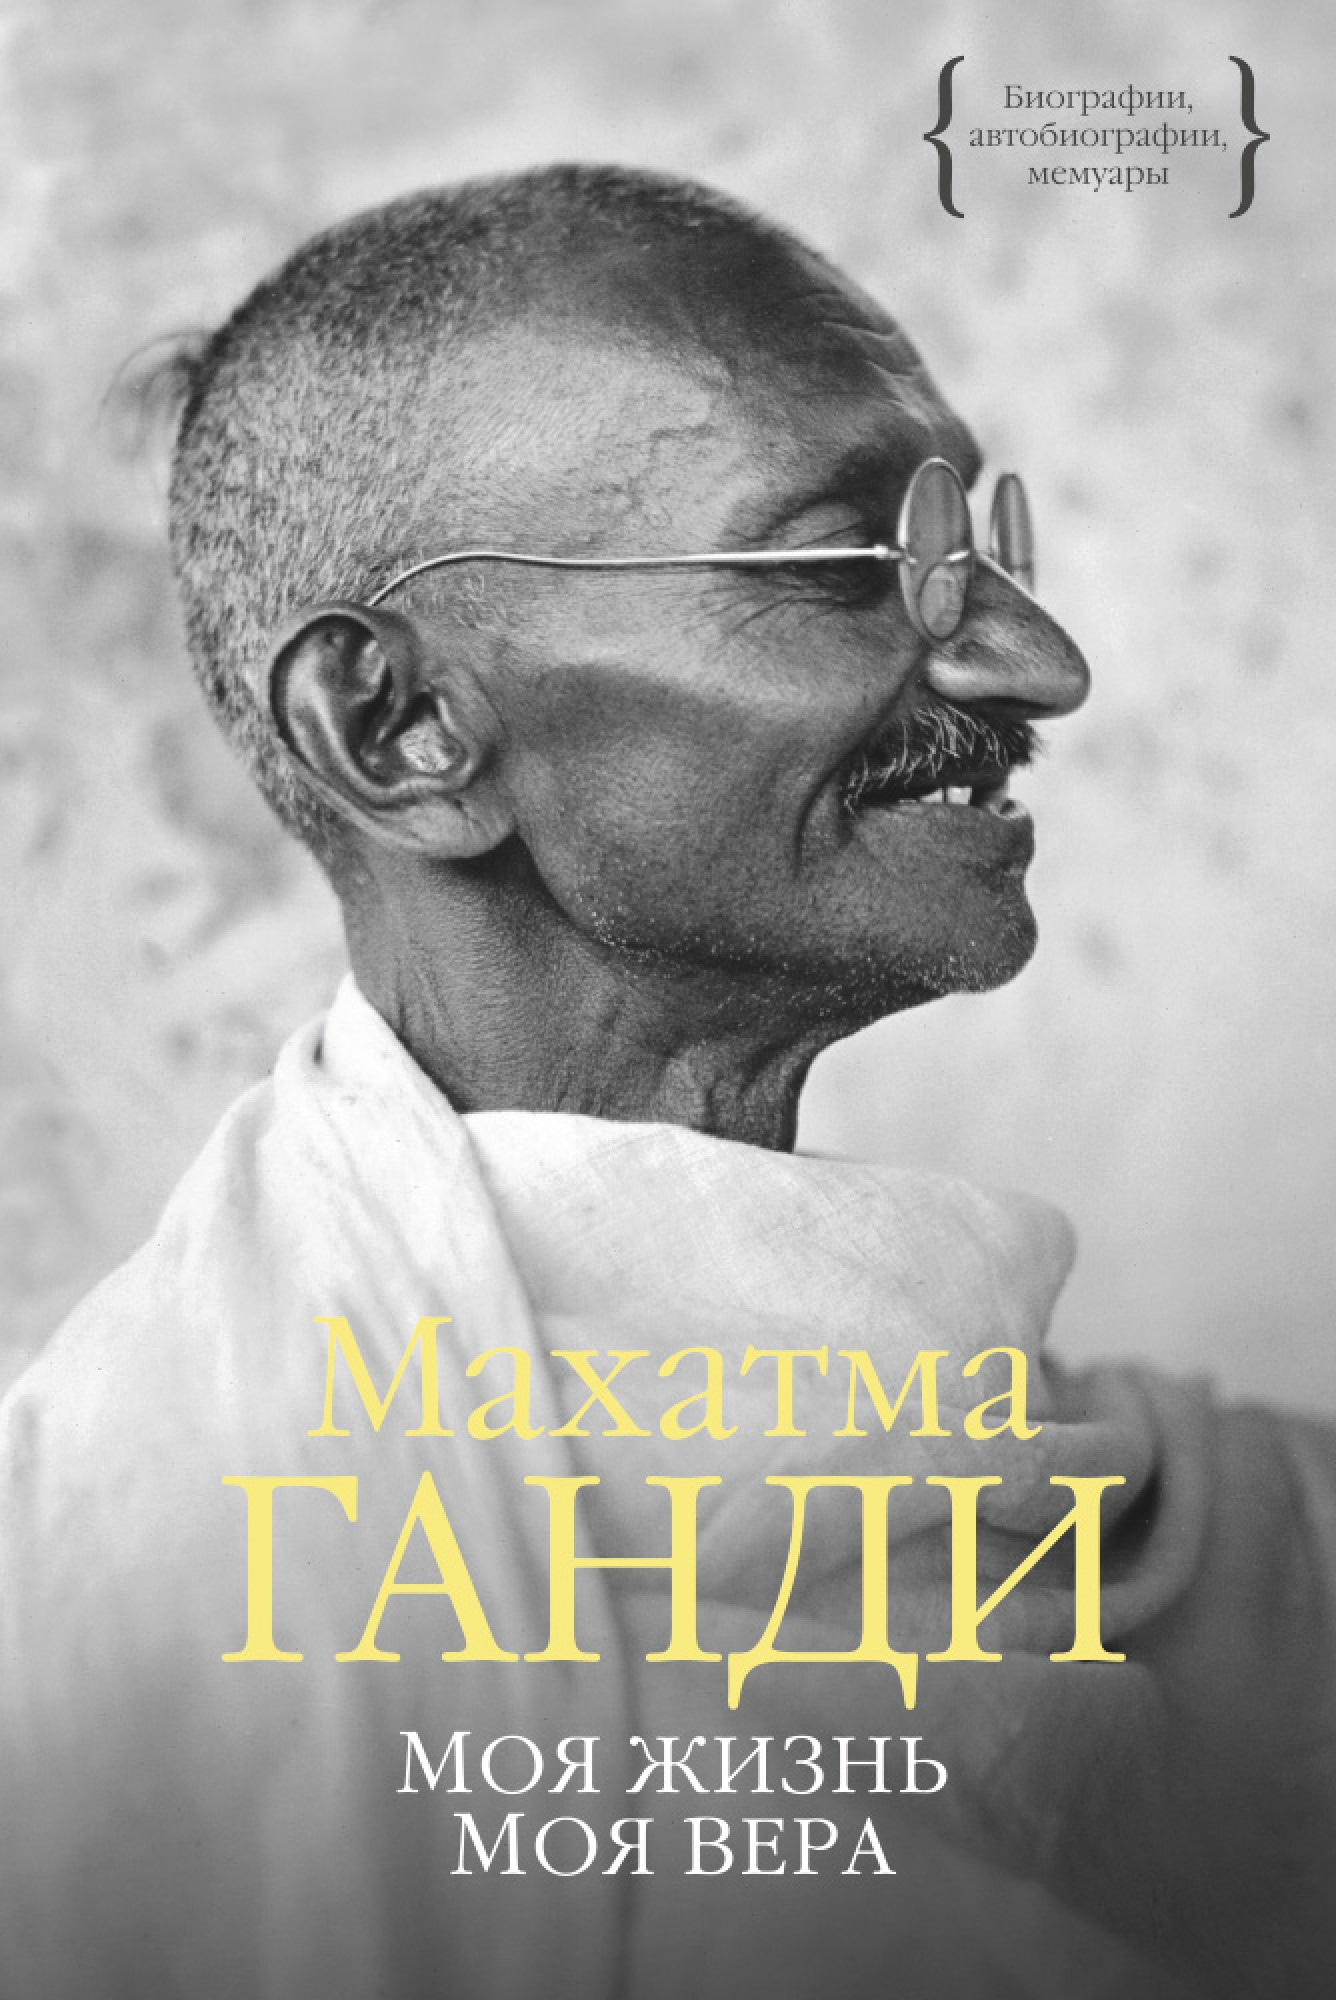 Мемуары автобиографии. Мохандас Карамчанд Ганди моя жизнь. Махатма Ганди моя жизнь книга.